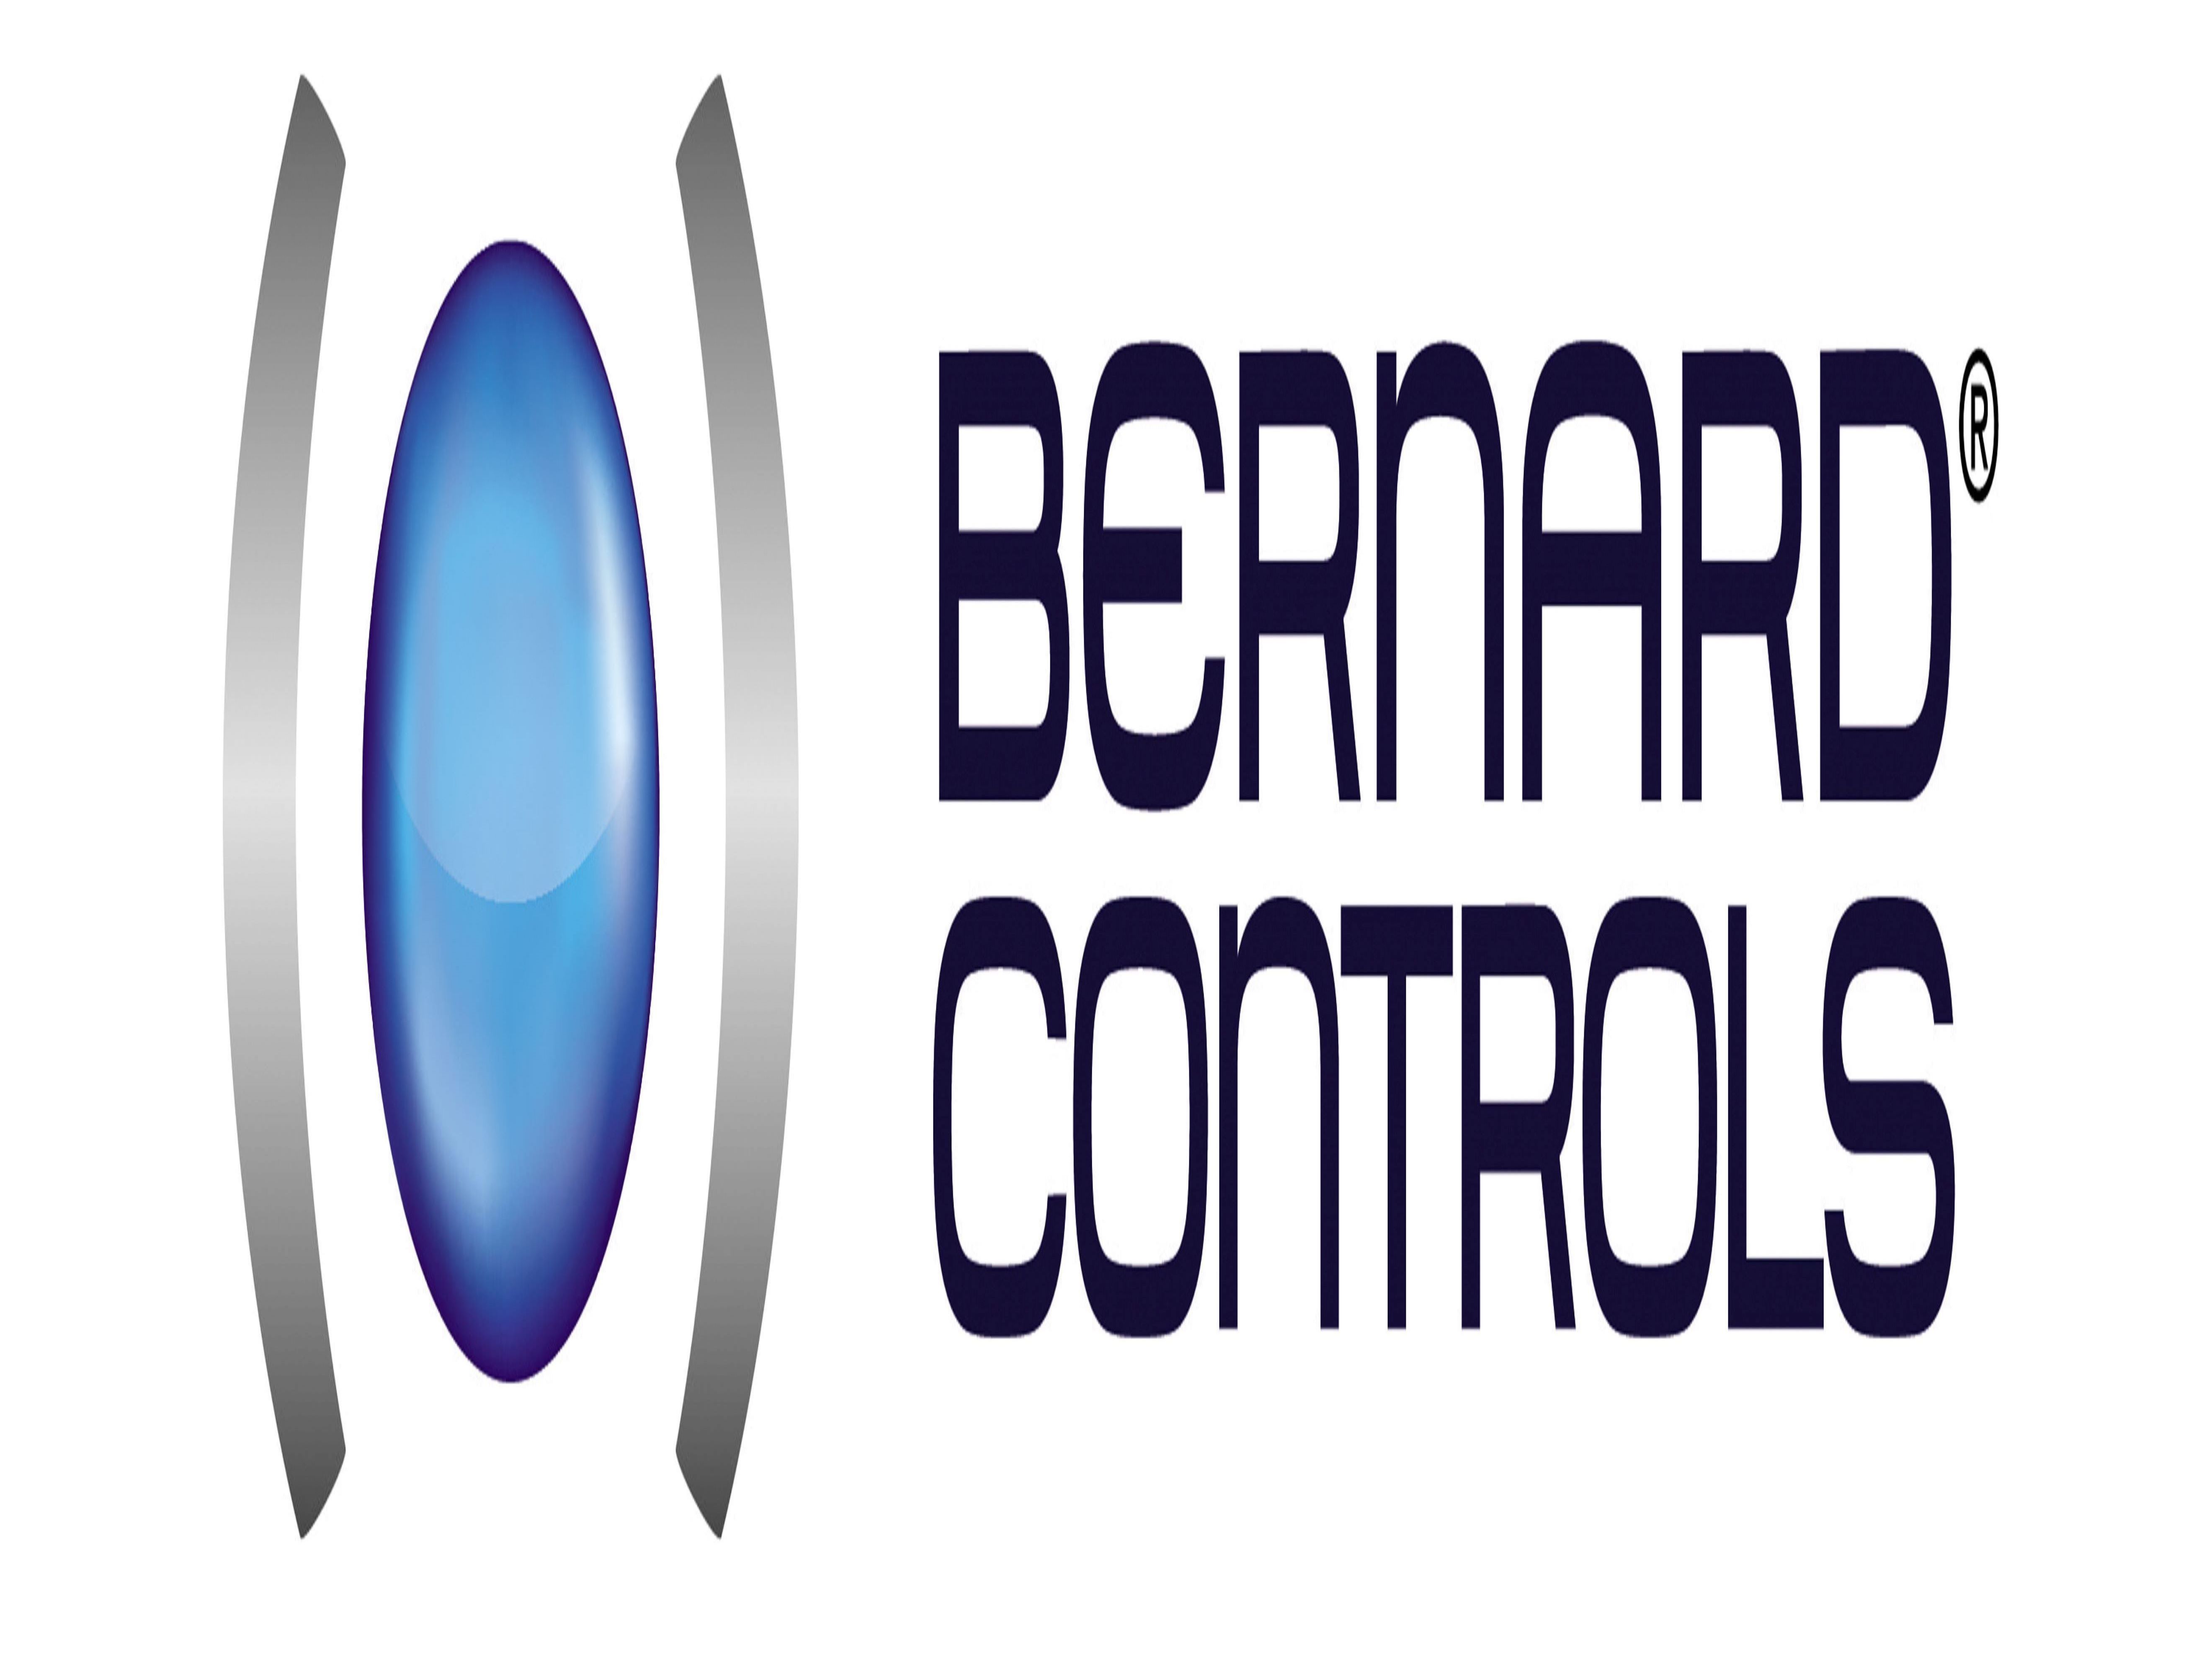 BERNARD CONTROLS